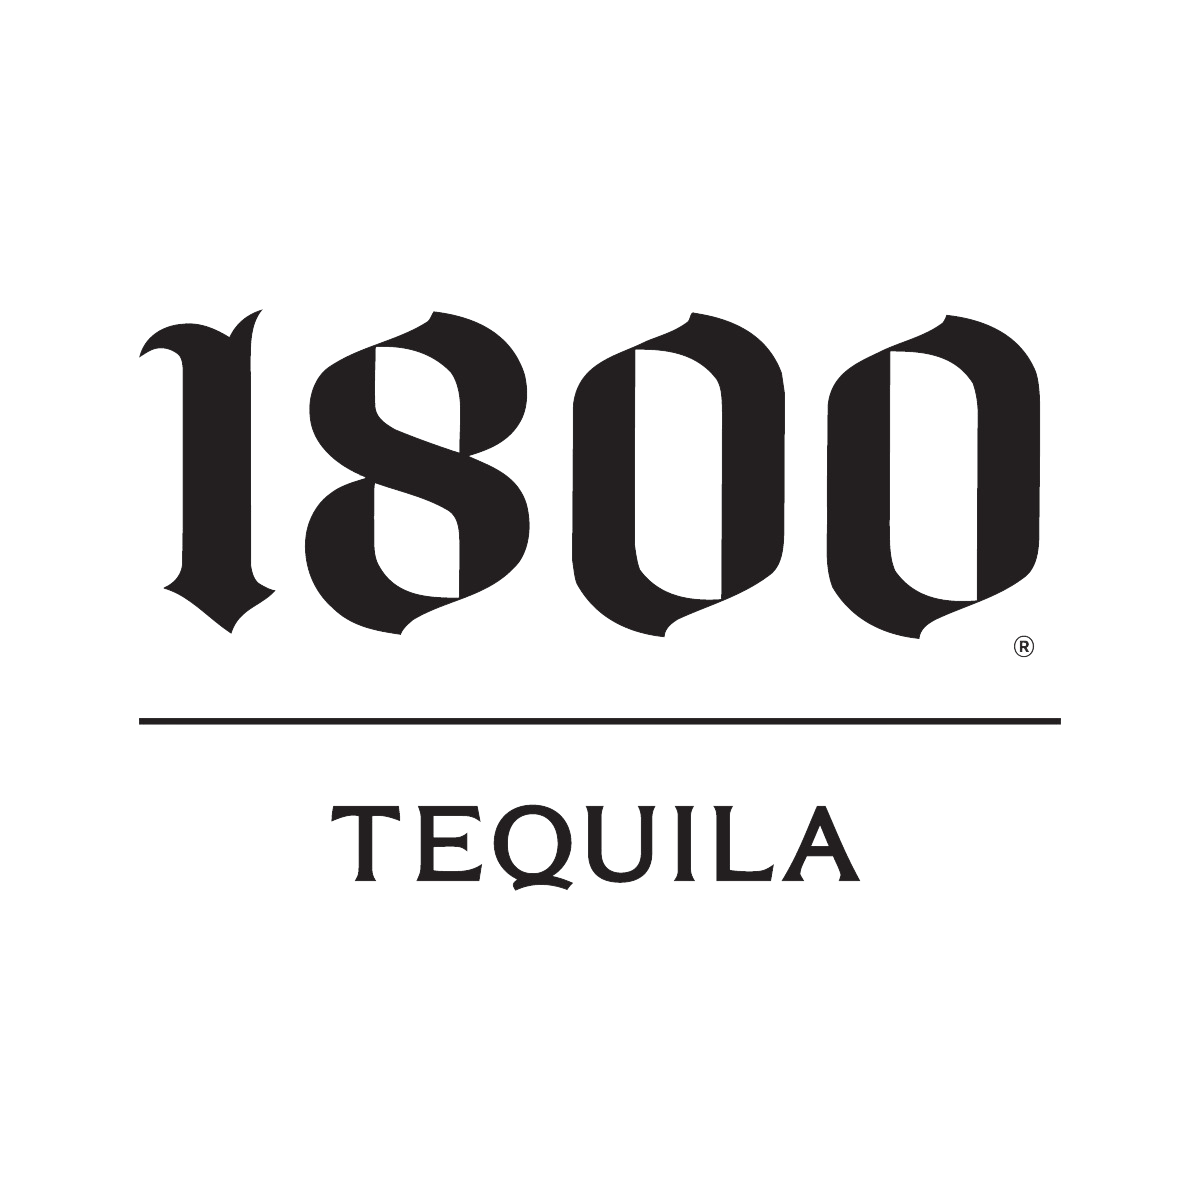 1800_tequila_black_-_logo_jpg-1656535759 - Edited.png